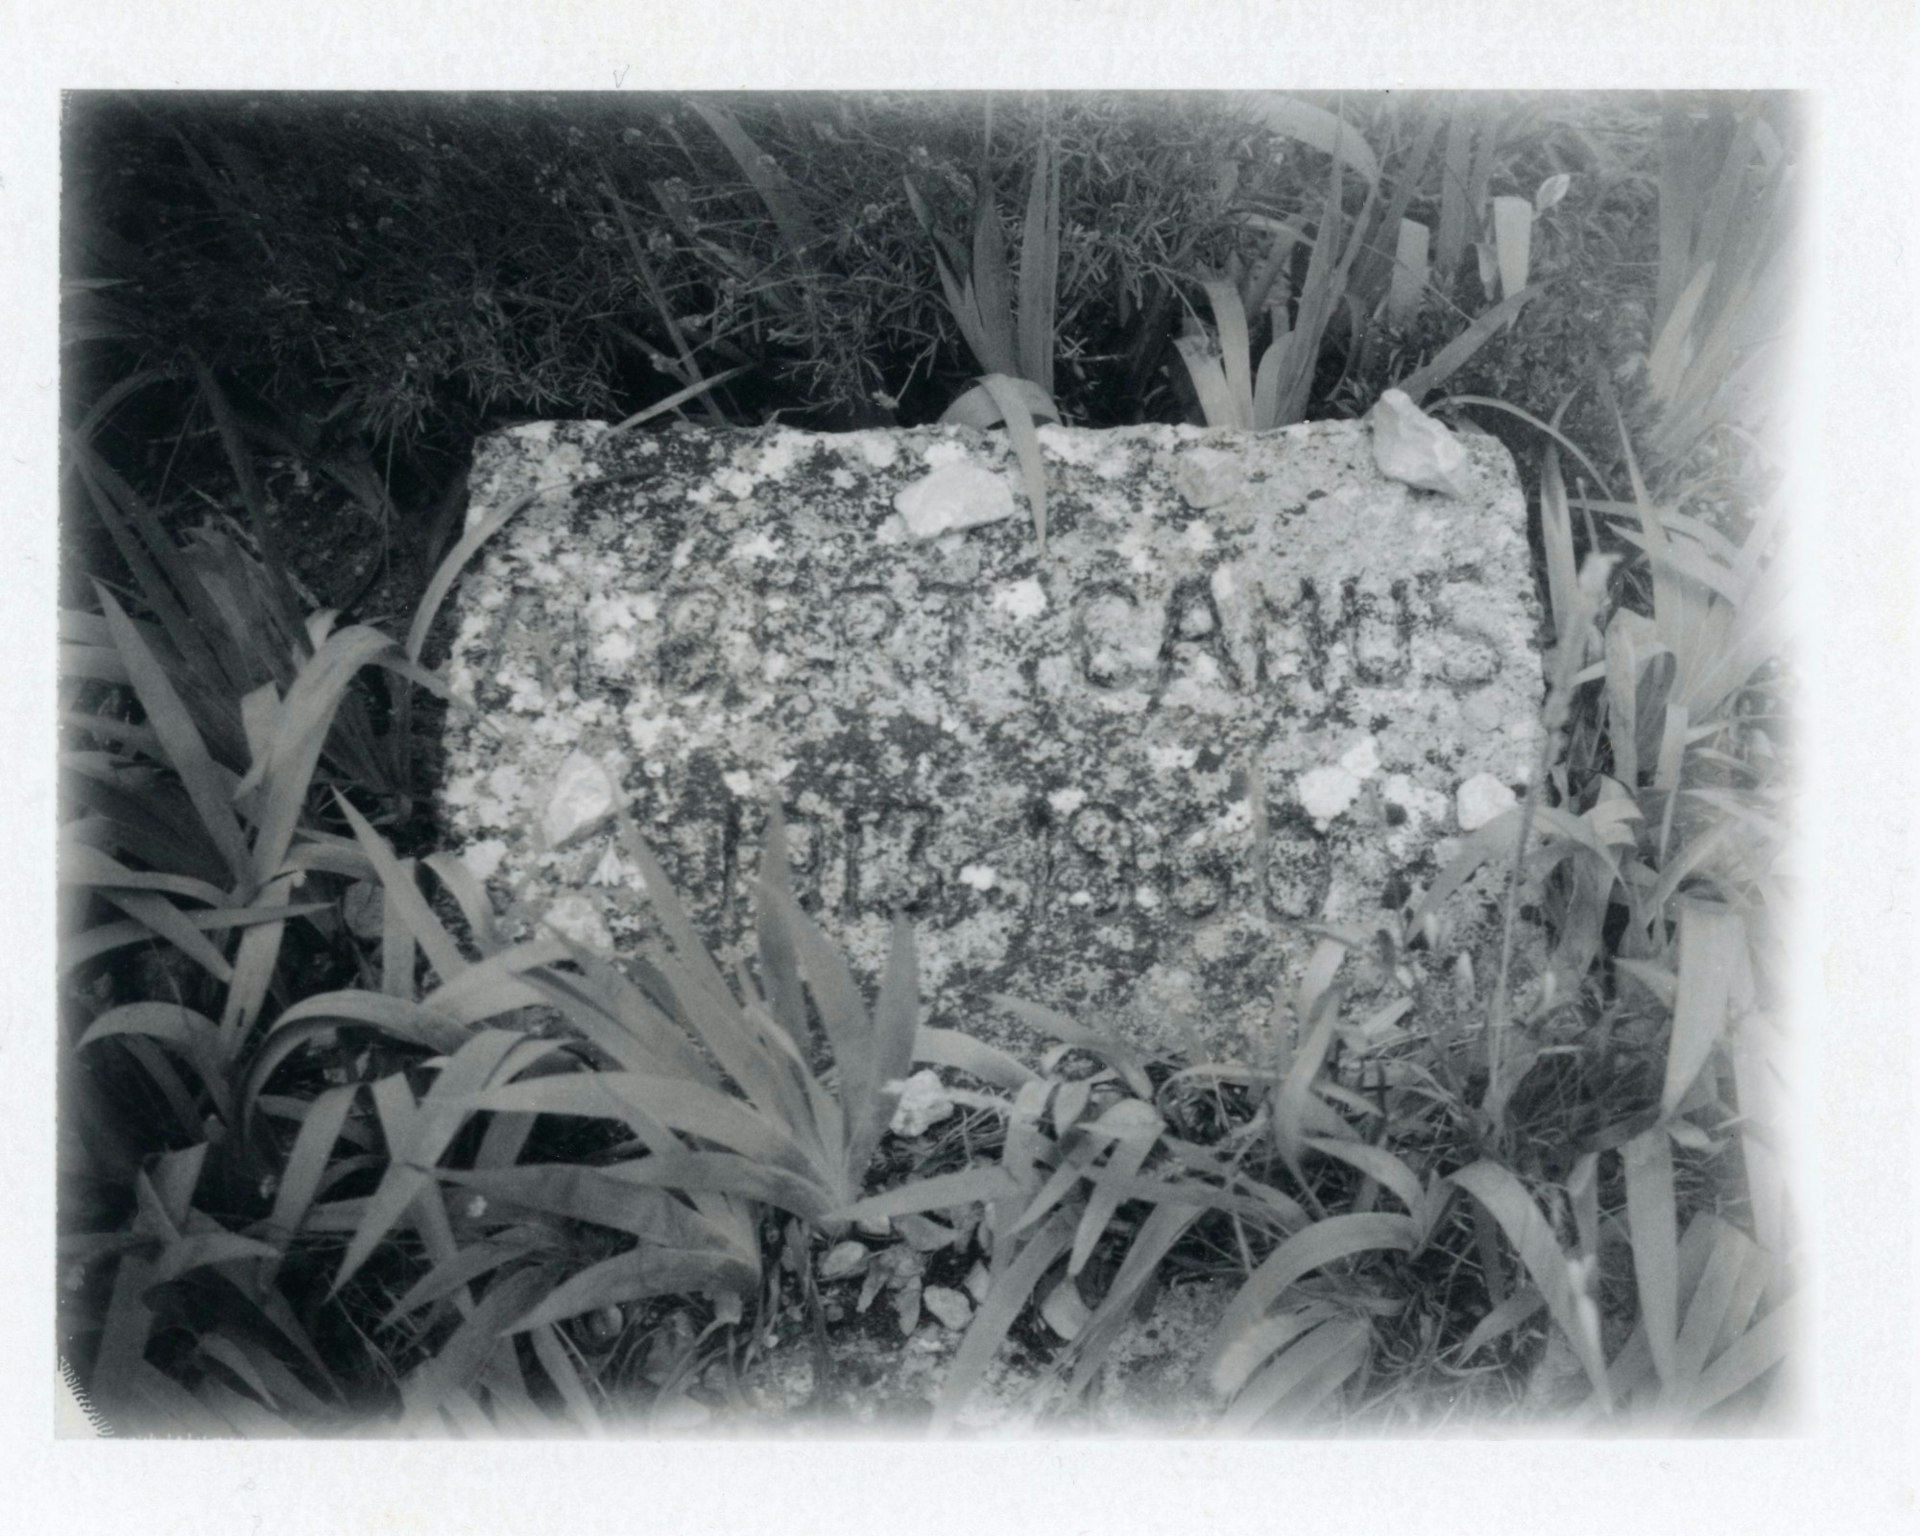 Patti Smith, ‘Grave of Albert Camus’, 2016 © Patti Smith, courtesy Gagosian, work exhibited by: GAGOSIAN